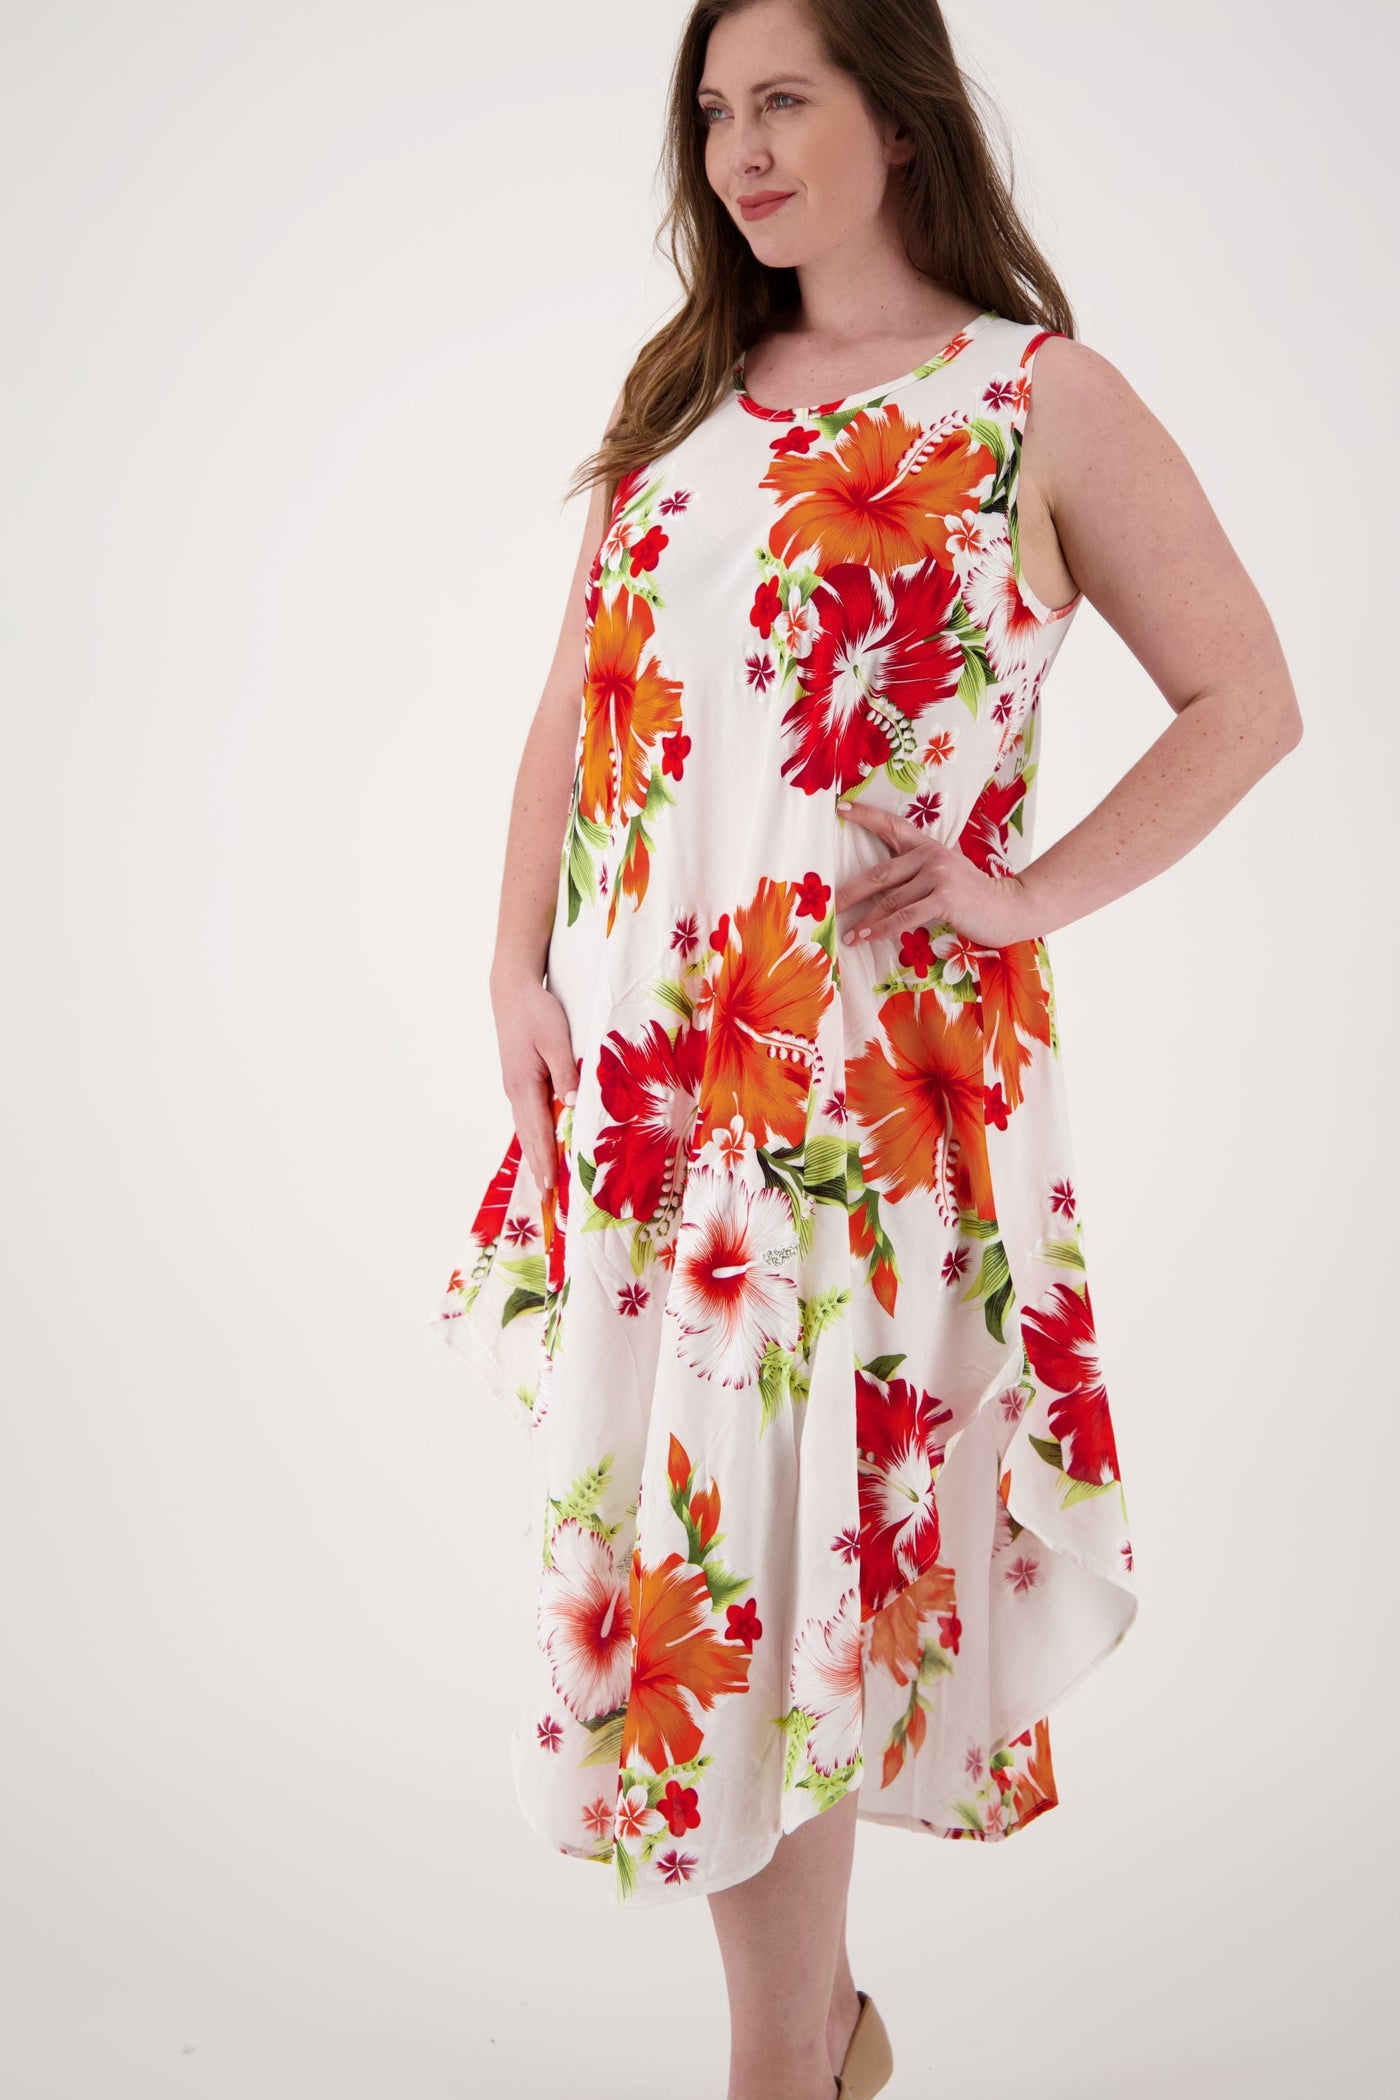 Floral Print Beach Dress One Size Fits Most TH-2501 - Advance Apparels Inc